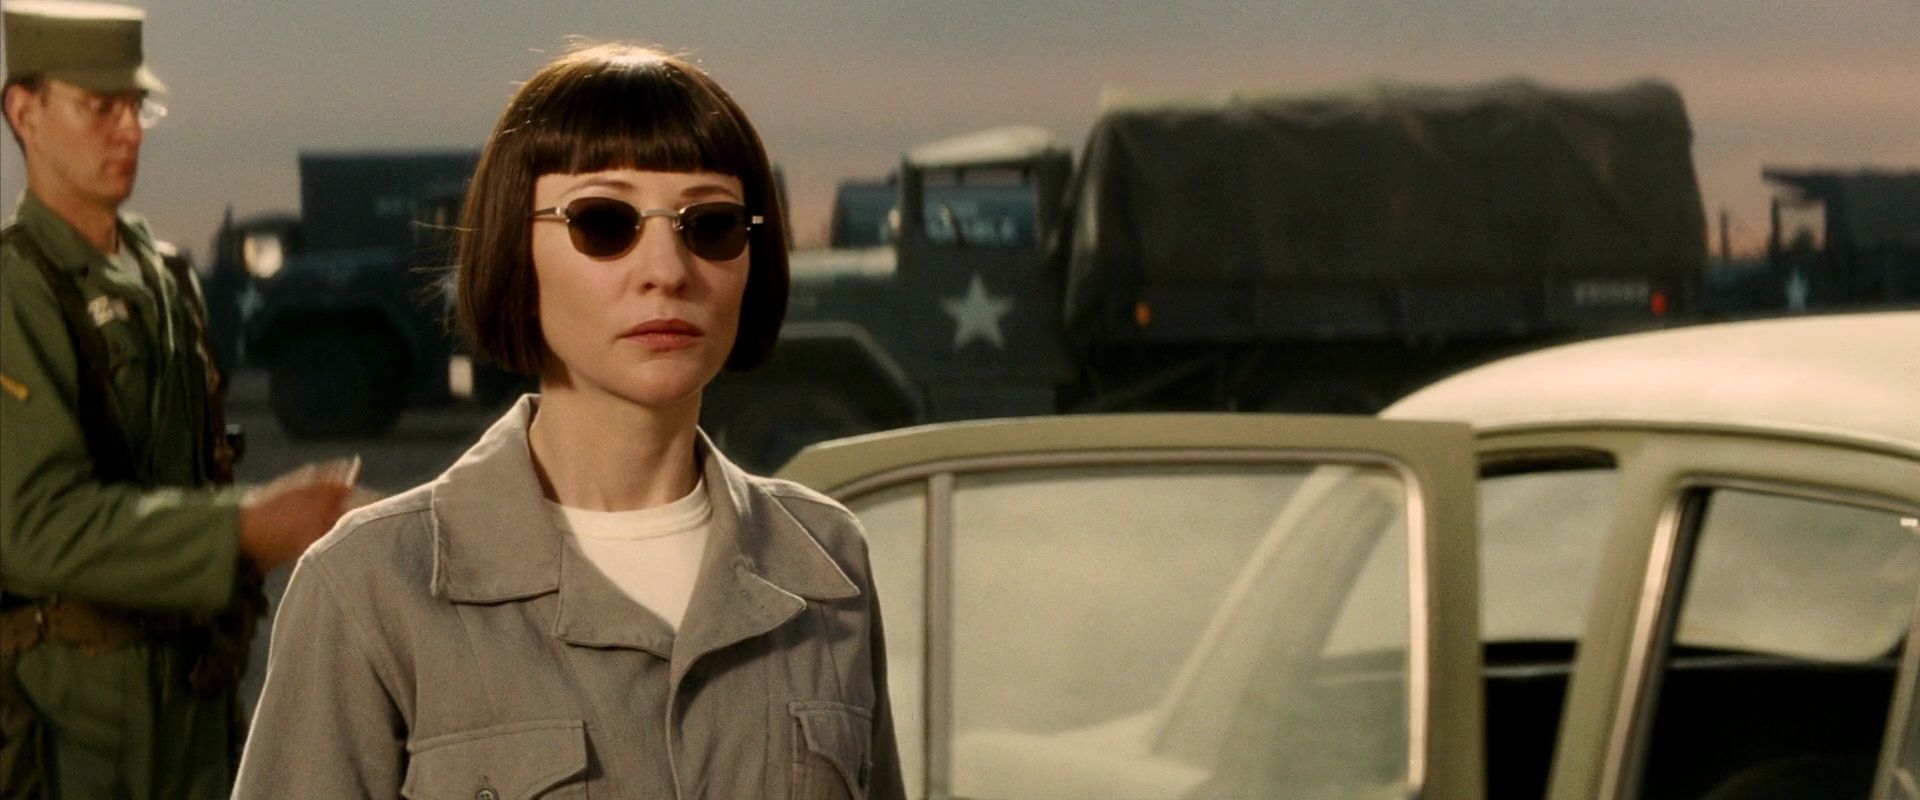 Worn on Indiana Jones and the Kingdom of the Crystal Skull (2008) Movie - Sunglasses of Cate Blanchett as Irina Spalko